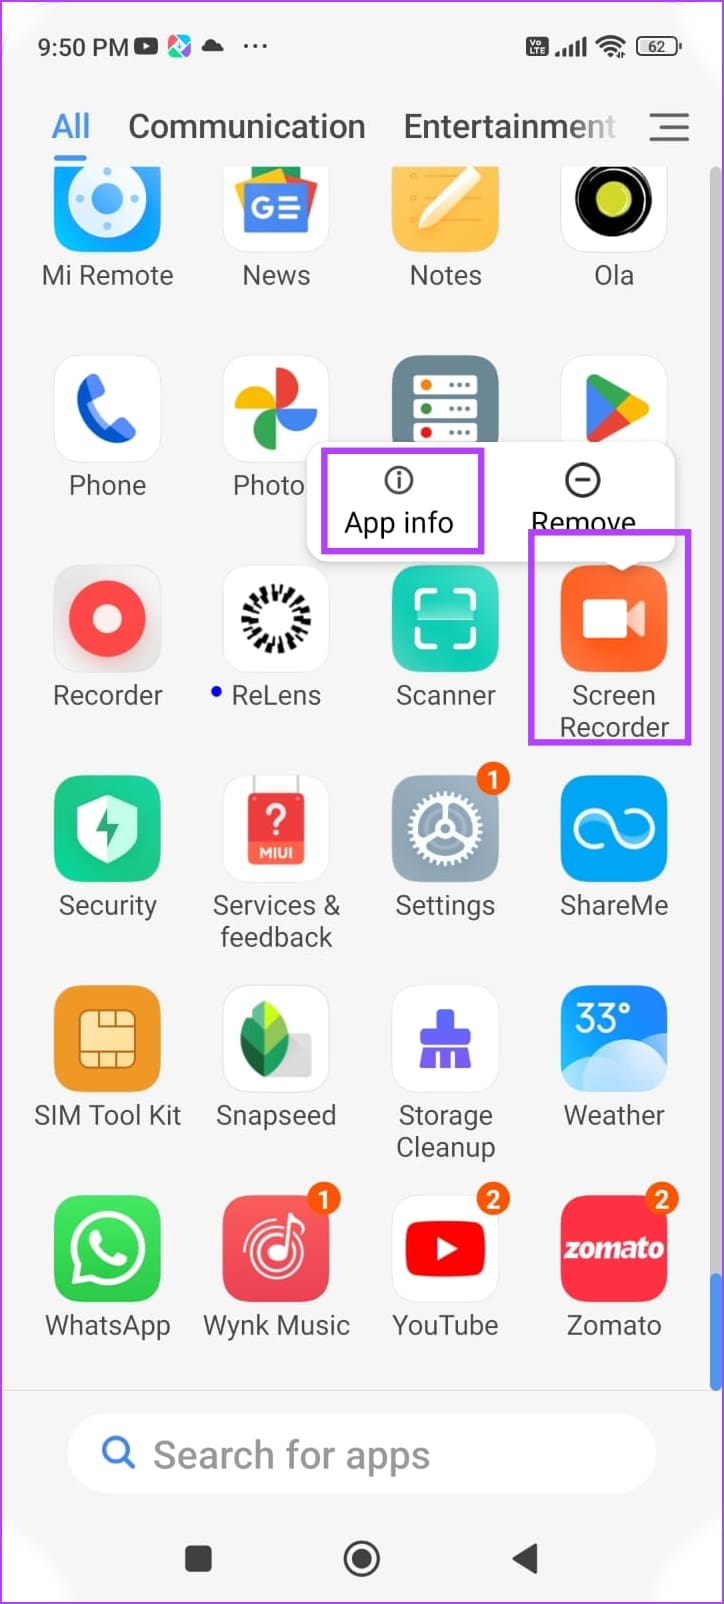 Screen Recorder App info